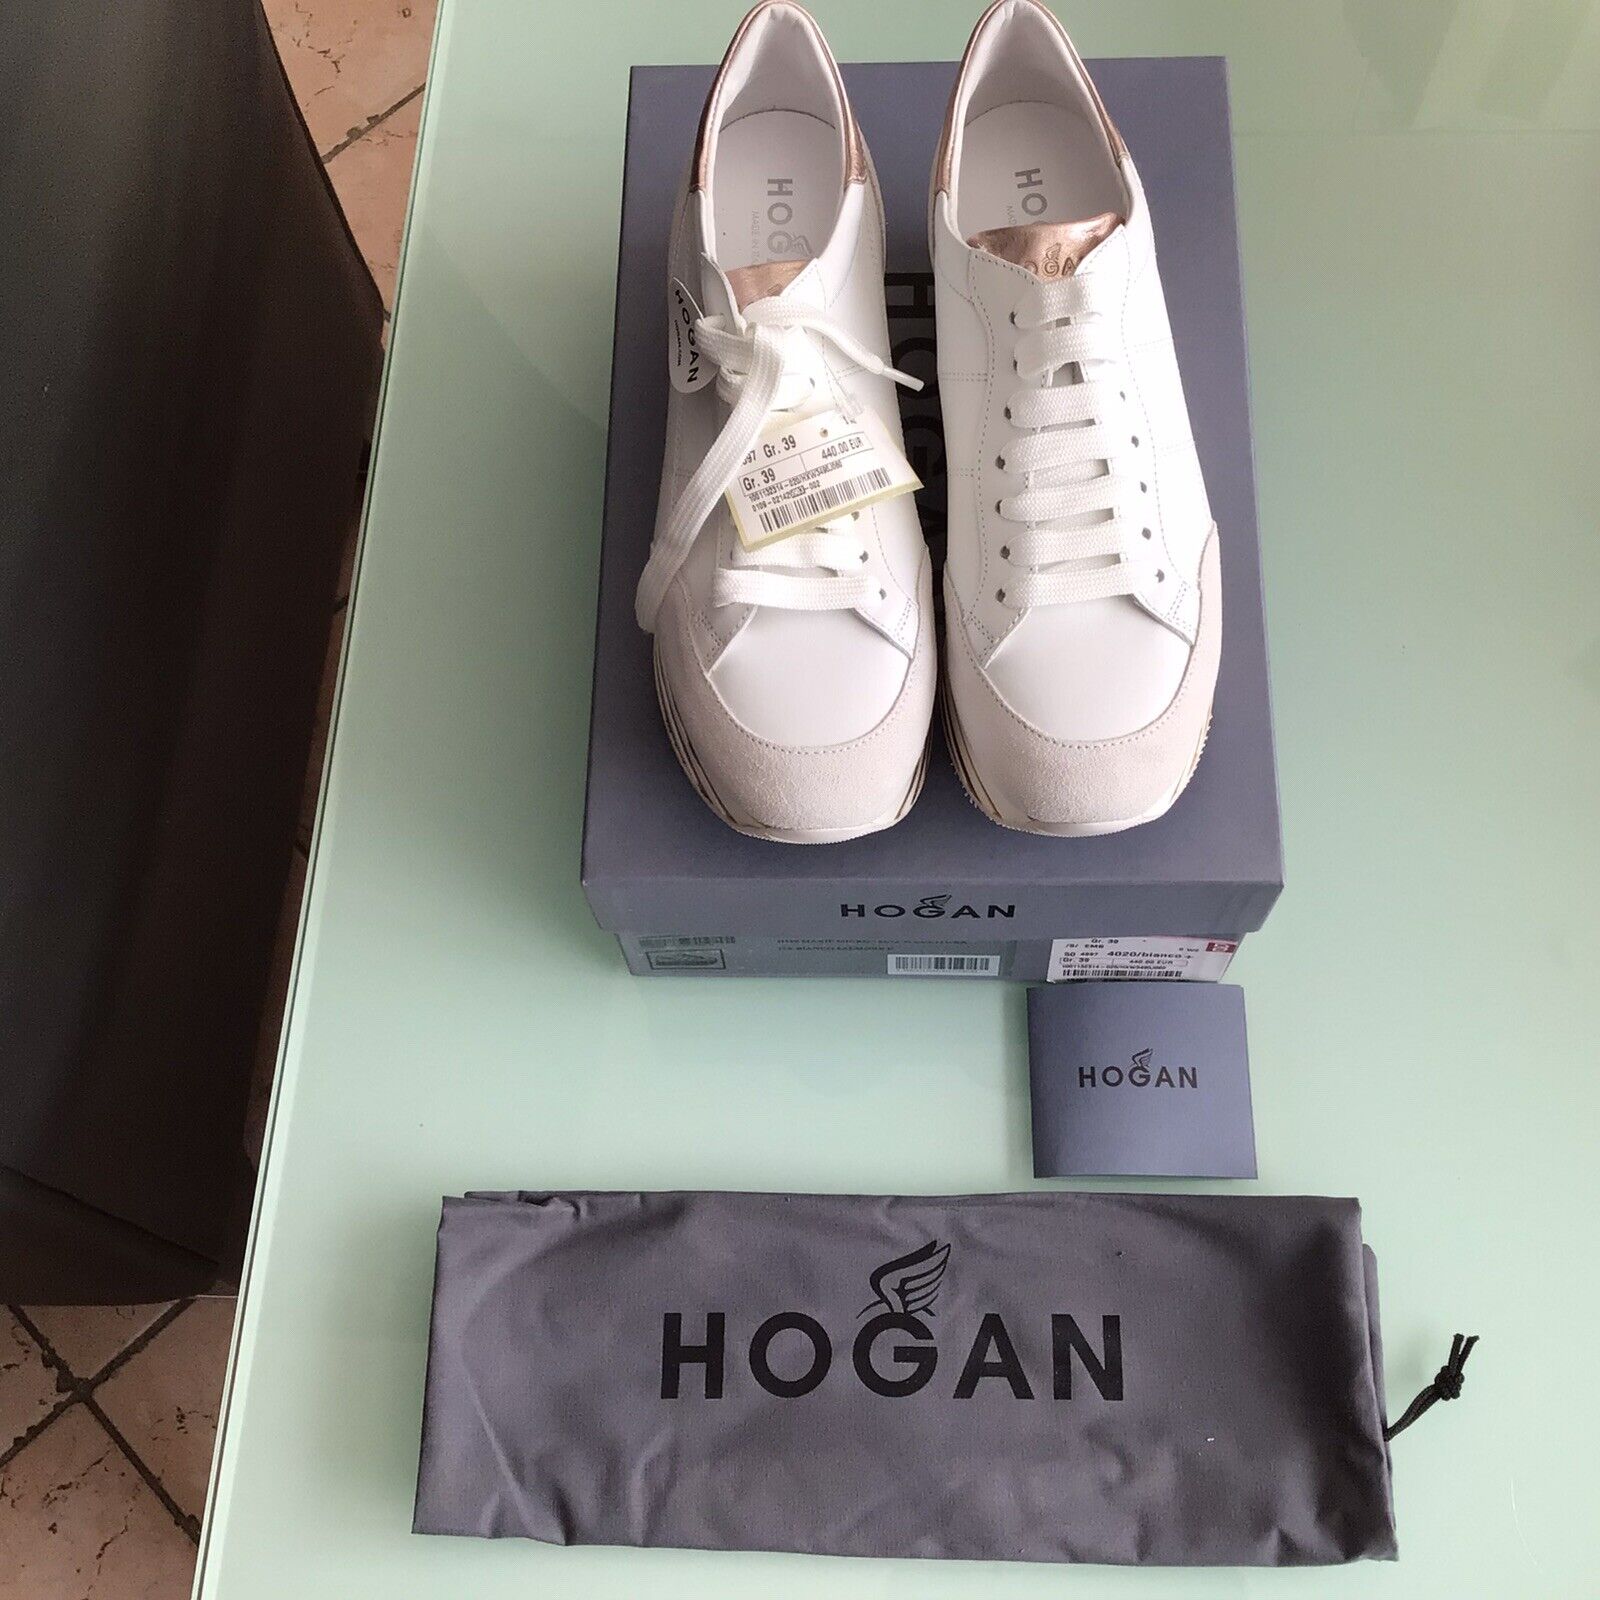 Neu, Hogan, Damen Plateau-Sneaker, weiß, Gr. 39, mit Karton